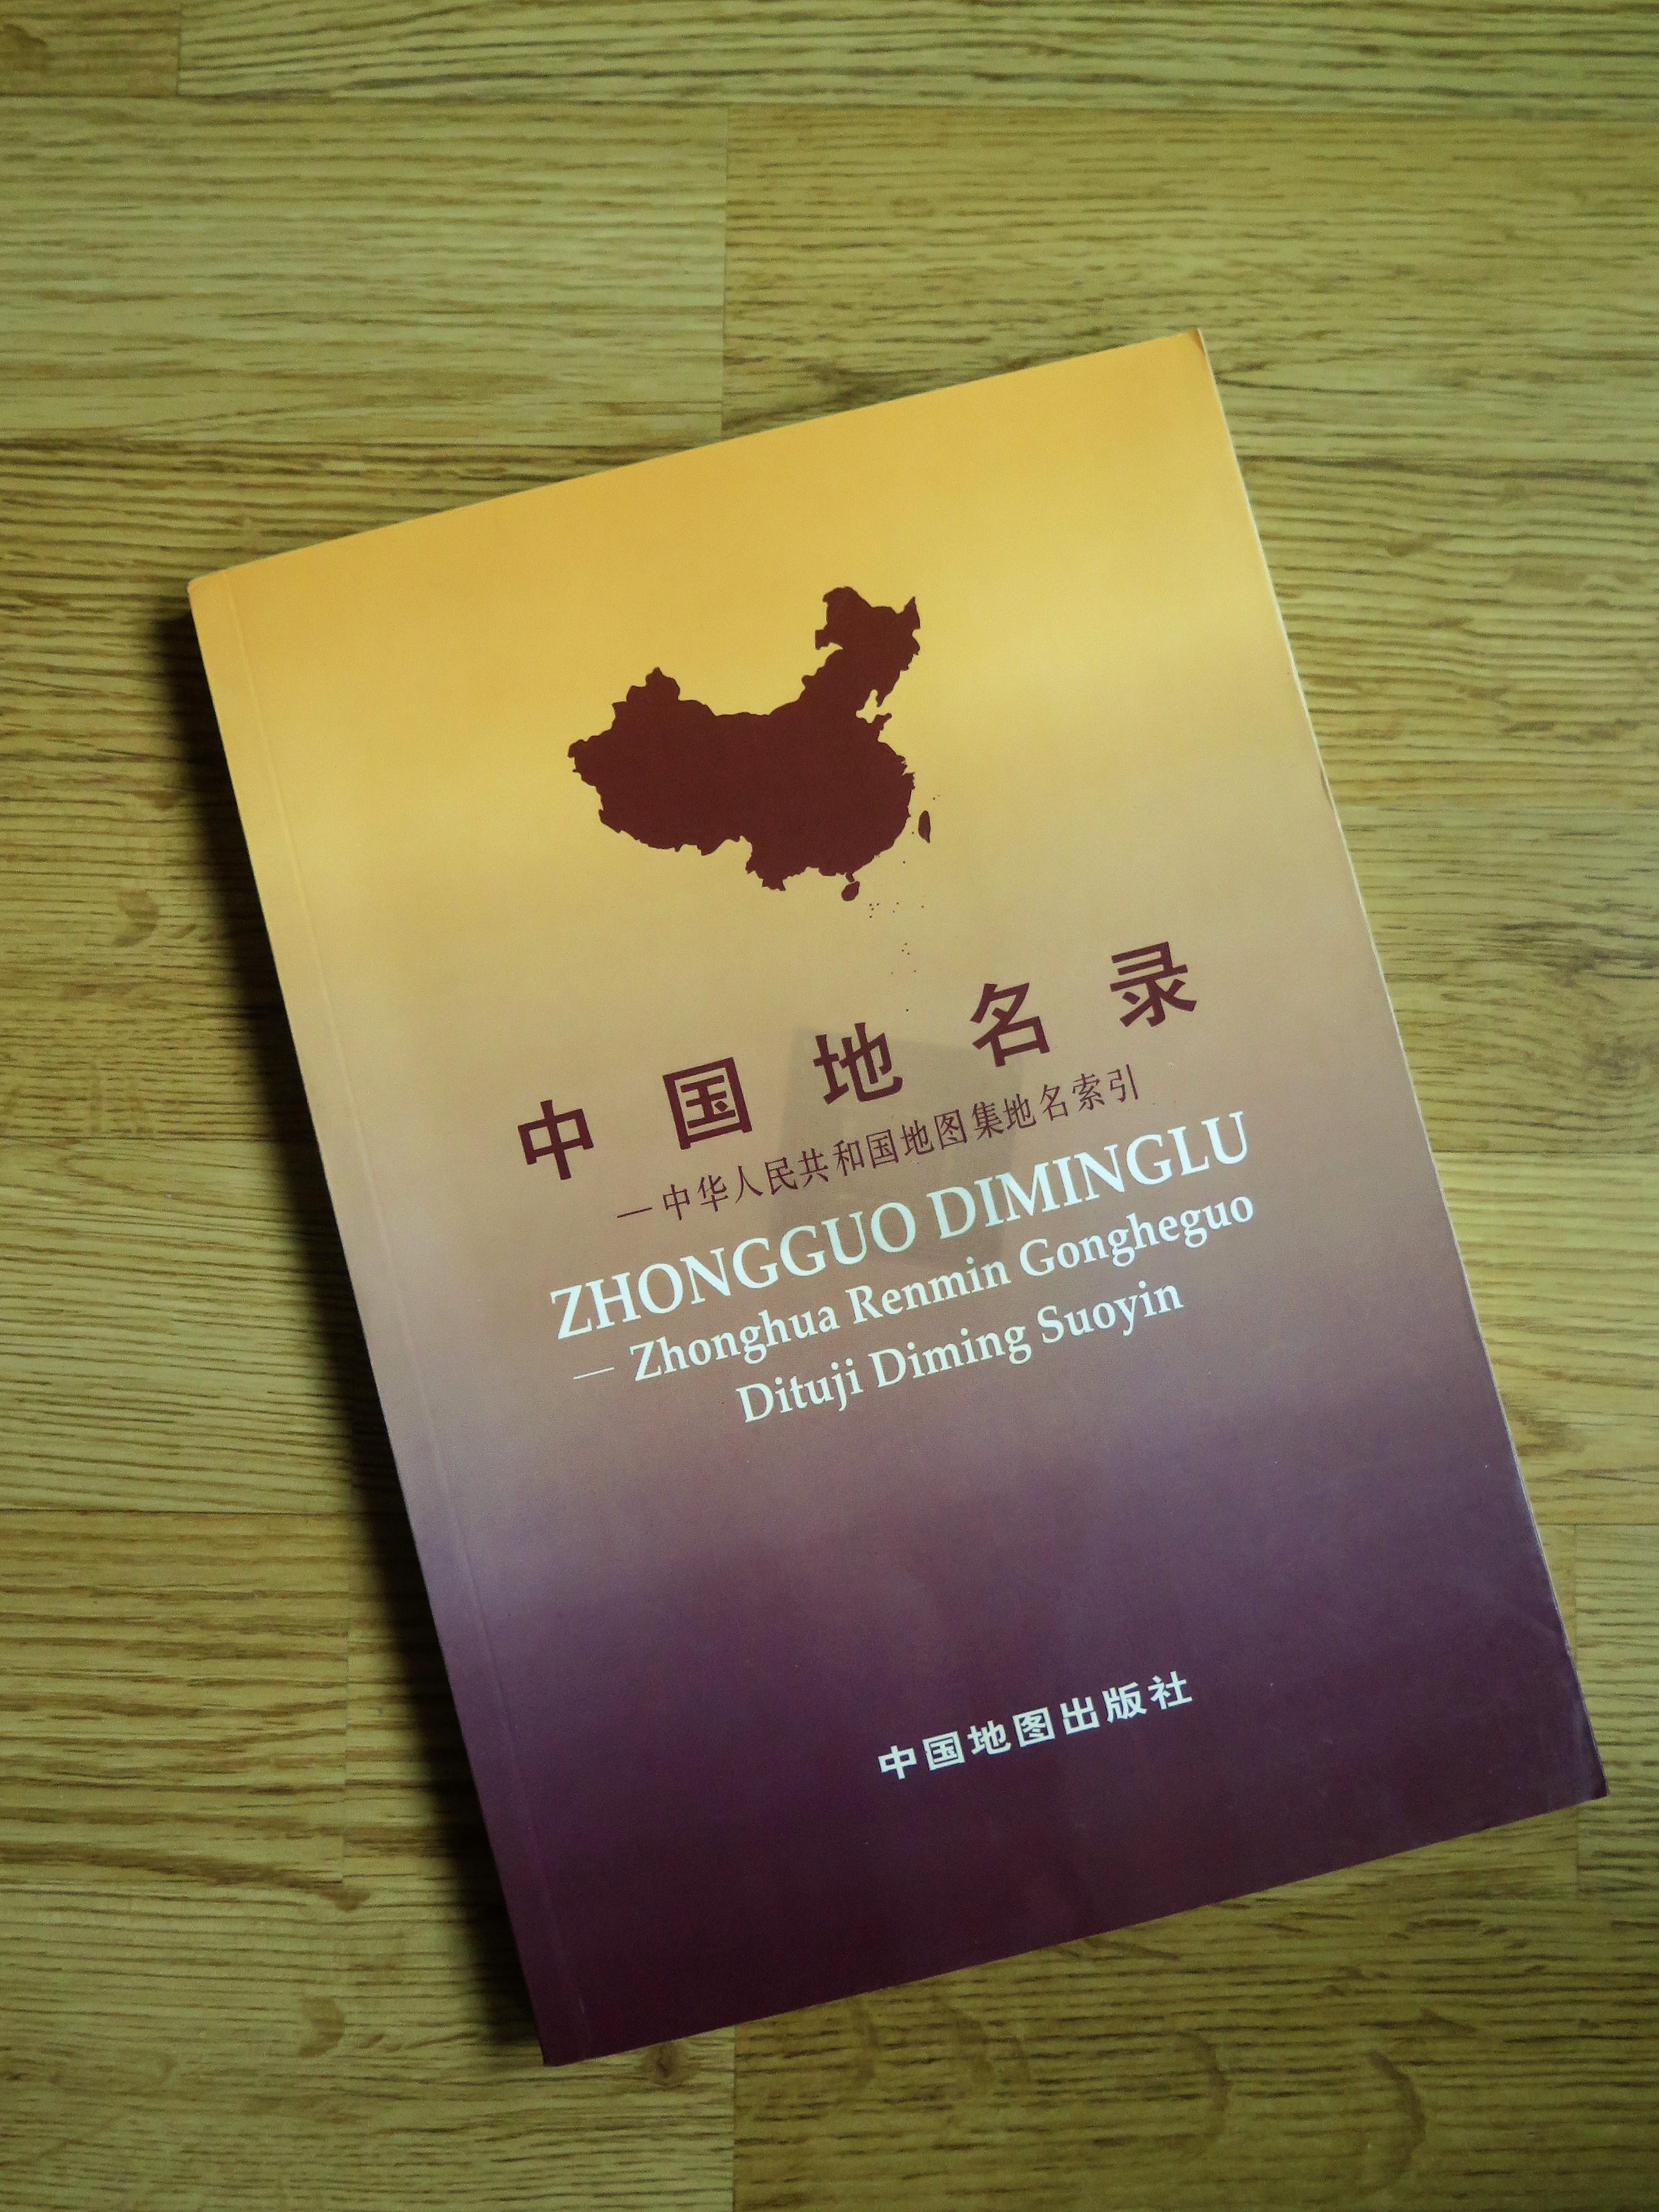 Gazetteer of China (Zhongguo Diminglu) - People's Republic of Atlas Gazetteer (Chinese Edition) - Unknown